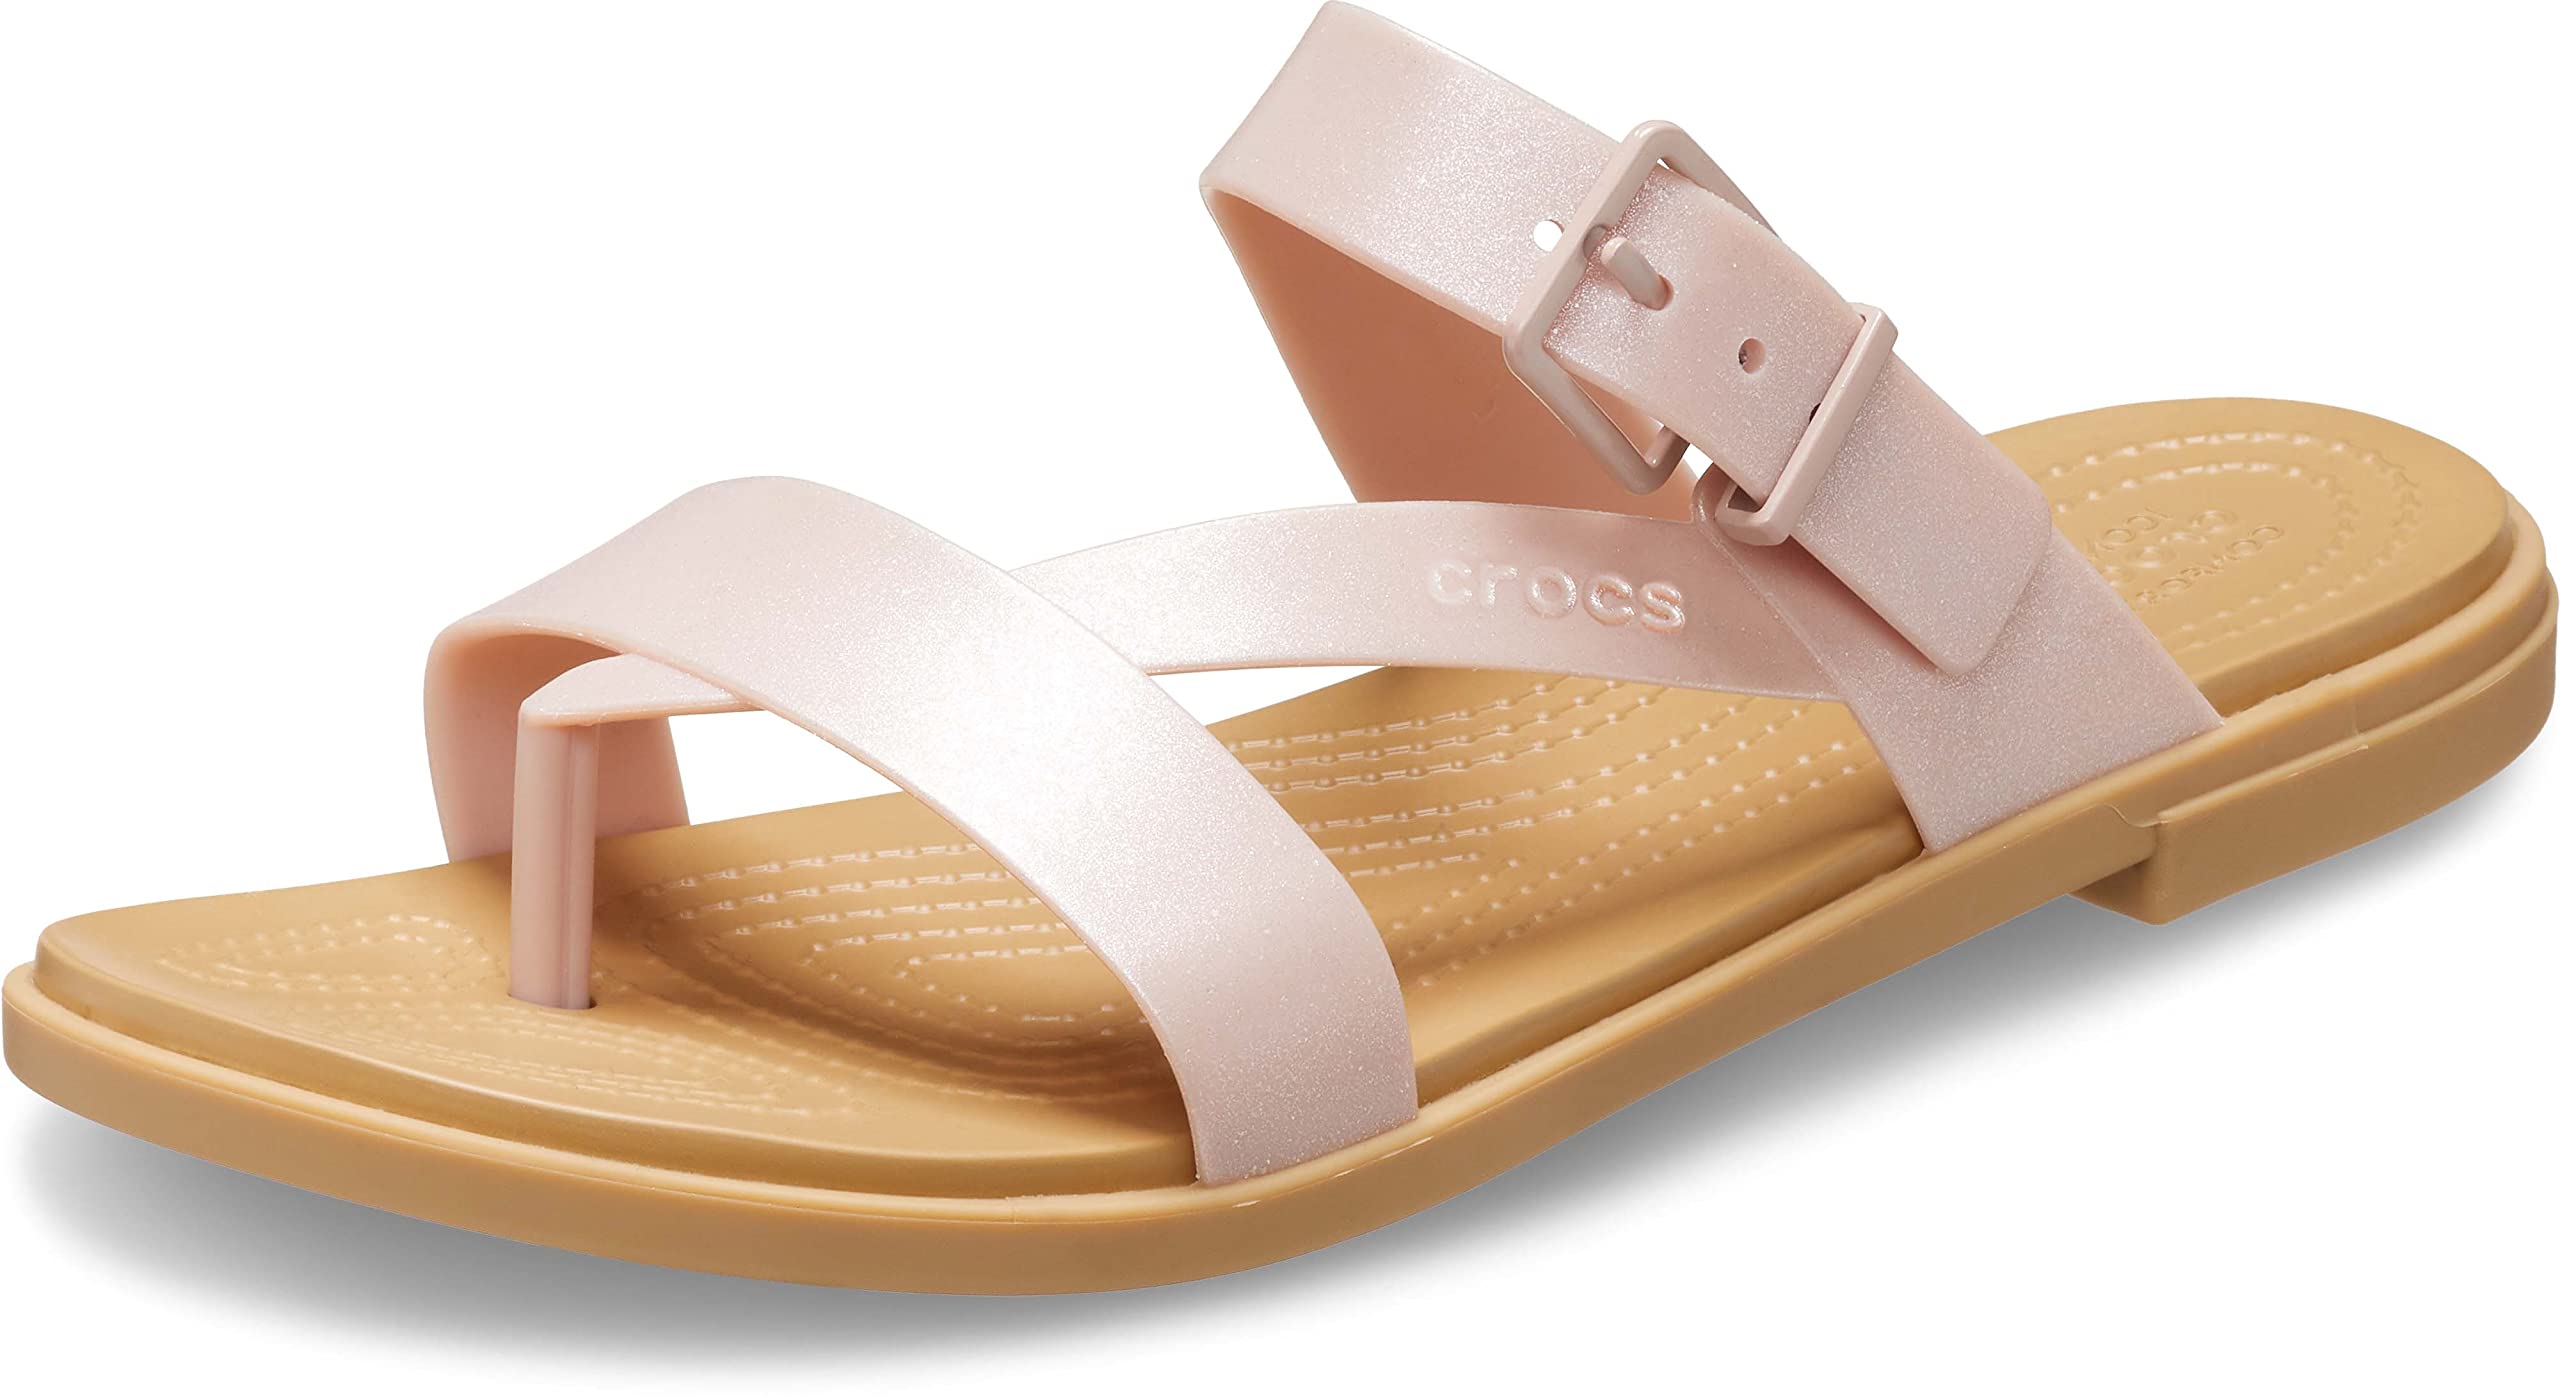 Crocs Women's Tulum Toe Post Sandals